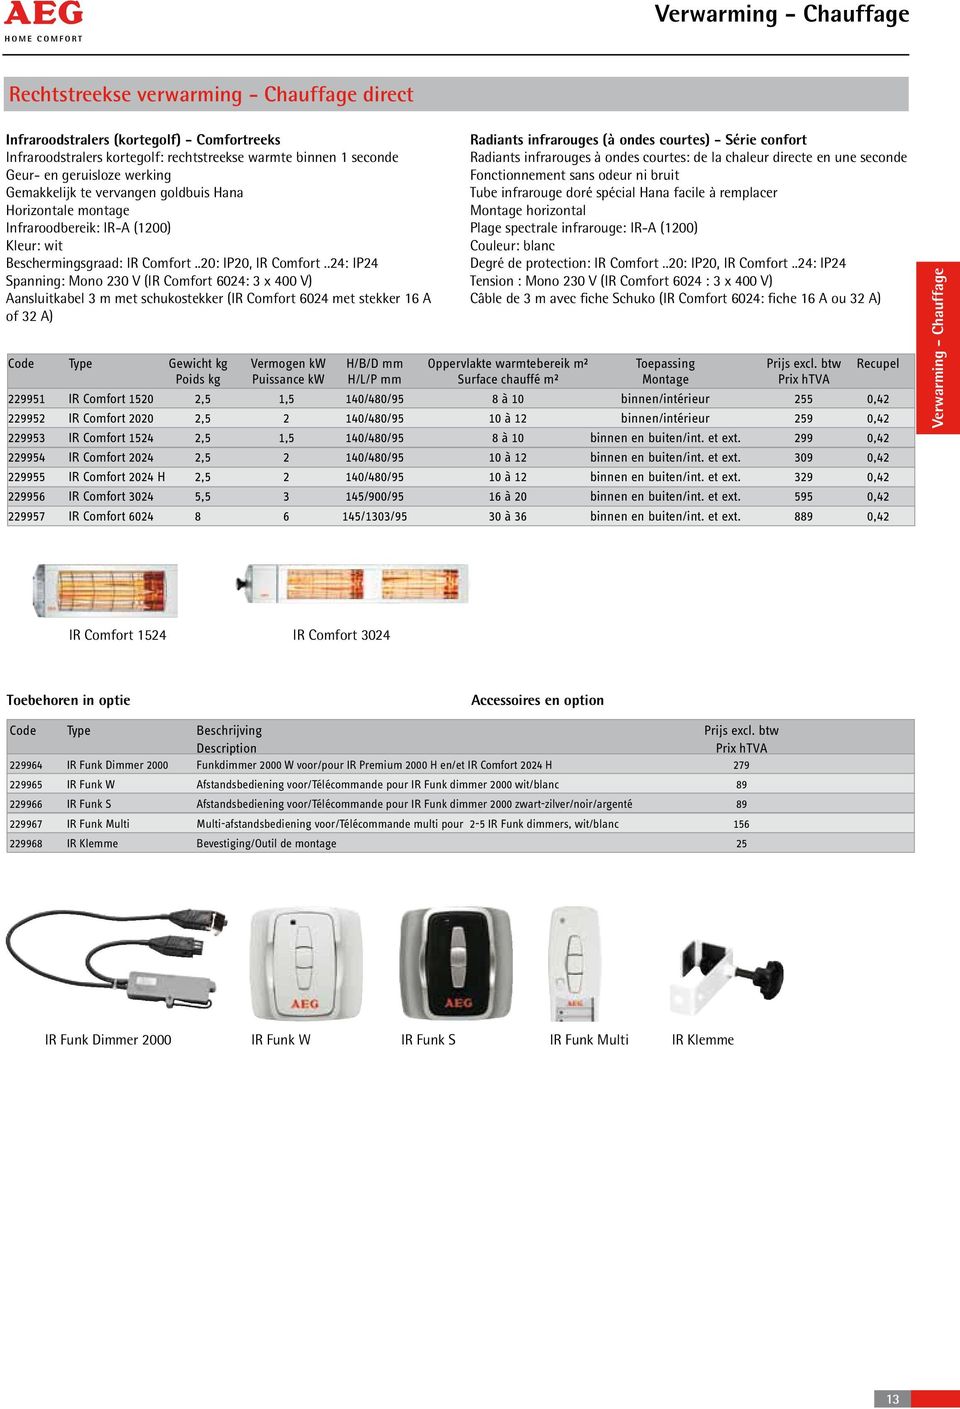 .24: IP24 Spanning: Mono 230 V (IR Comfort 6024: 3 x 400 V) Aansluitkabel 3 m met schukostekker (IR Comfort 6024 met stekker 16 A of 32 A) Radiants infrarouges (à ondes courtes) - Série confort